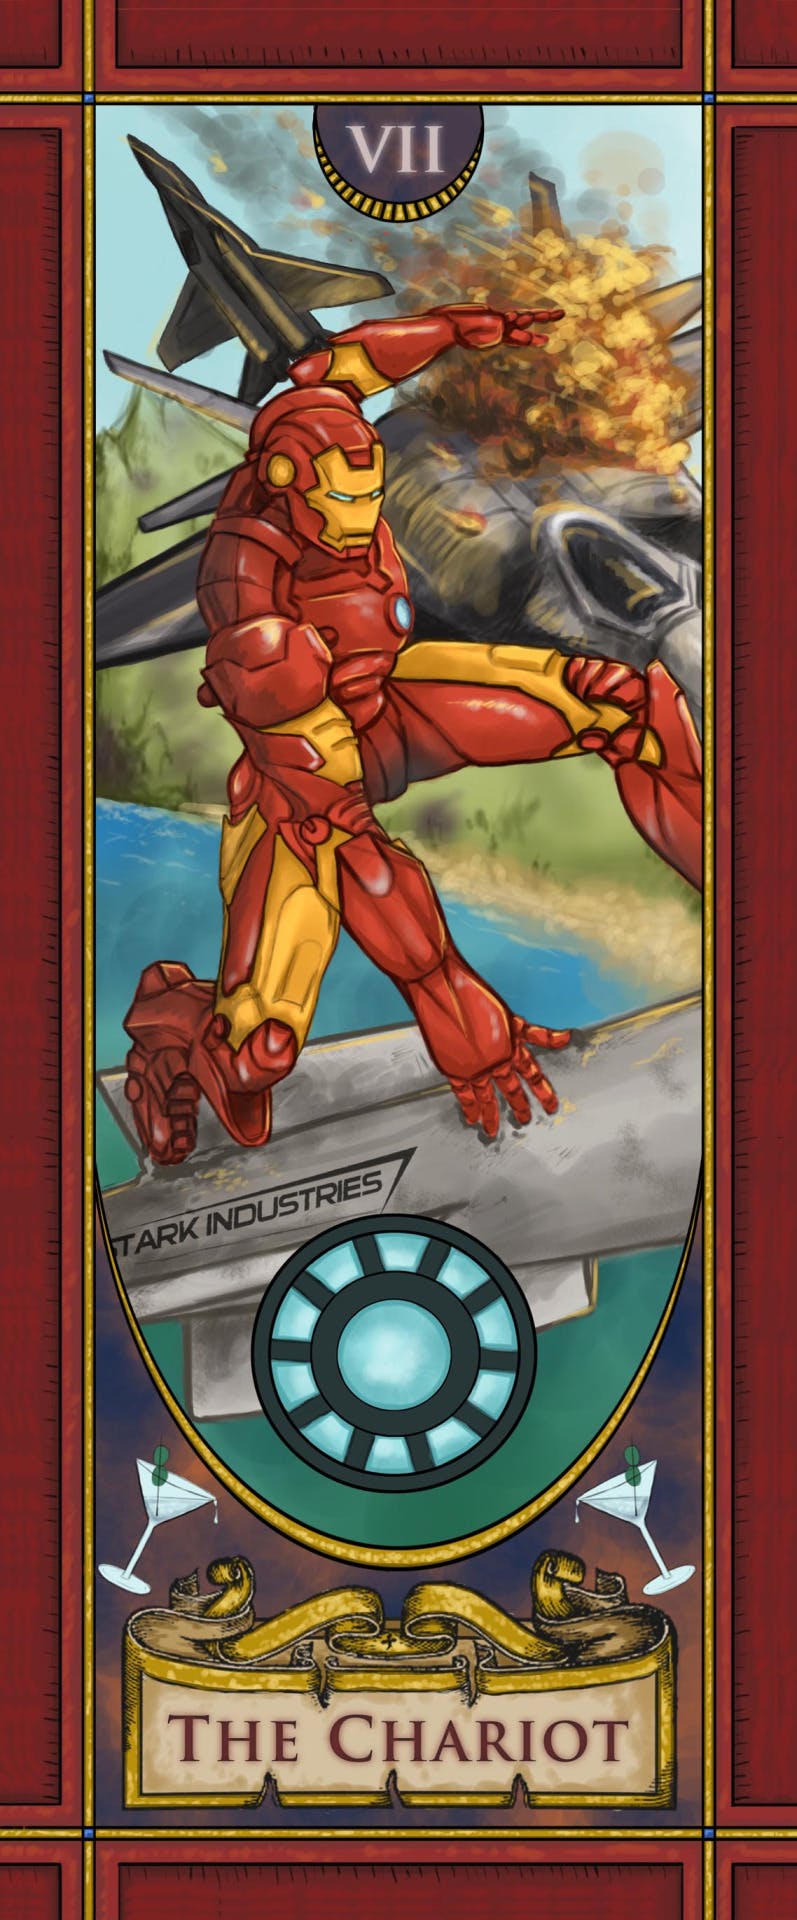 Tony Stark riding a Stark Industries warhead represents the Major Arcana card the Chariot.